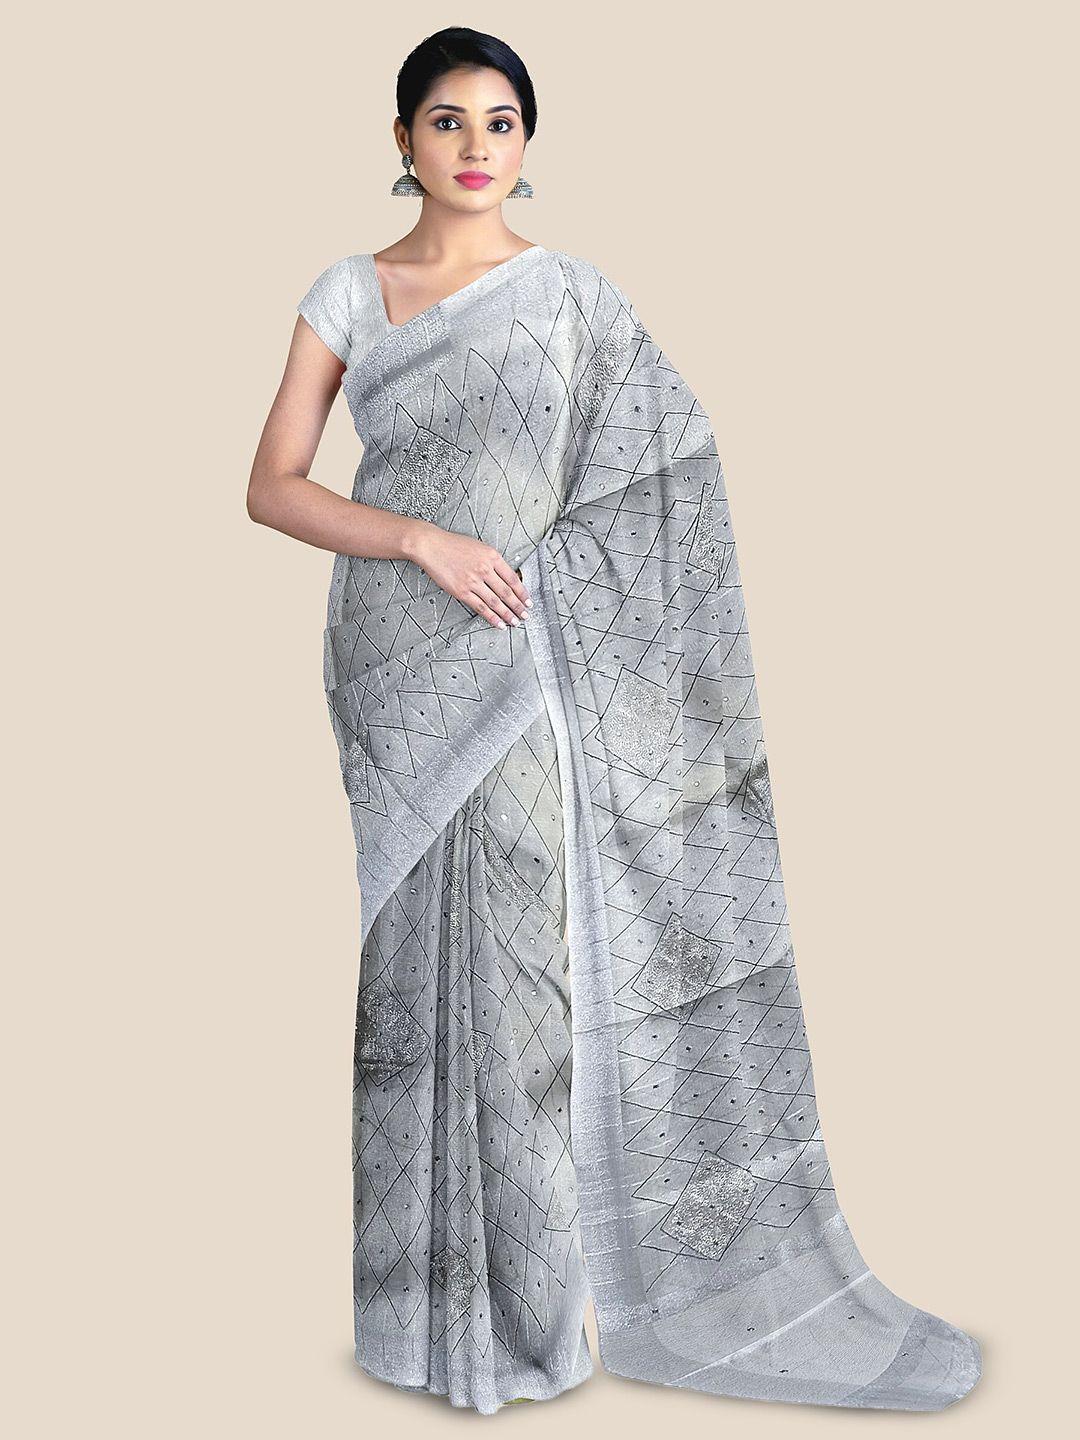 the chennai silks embellished tissue banarasi saree